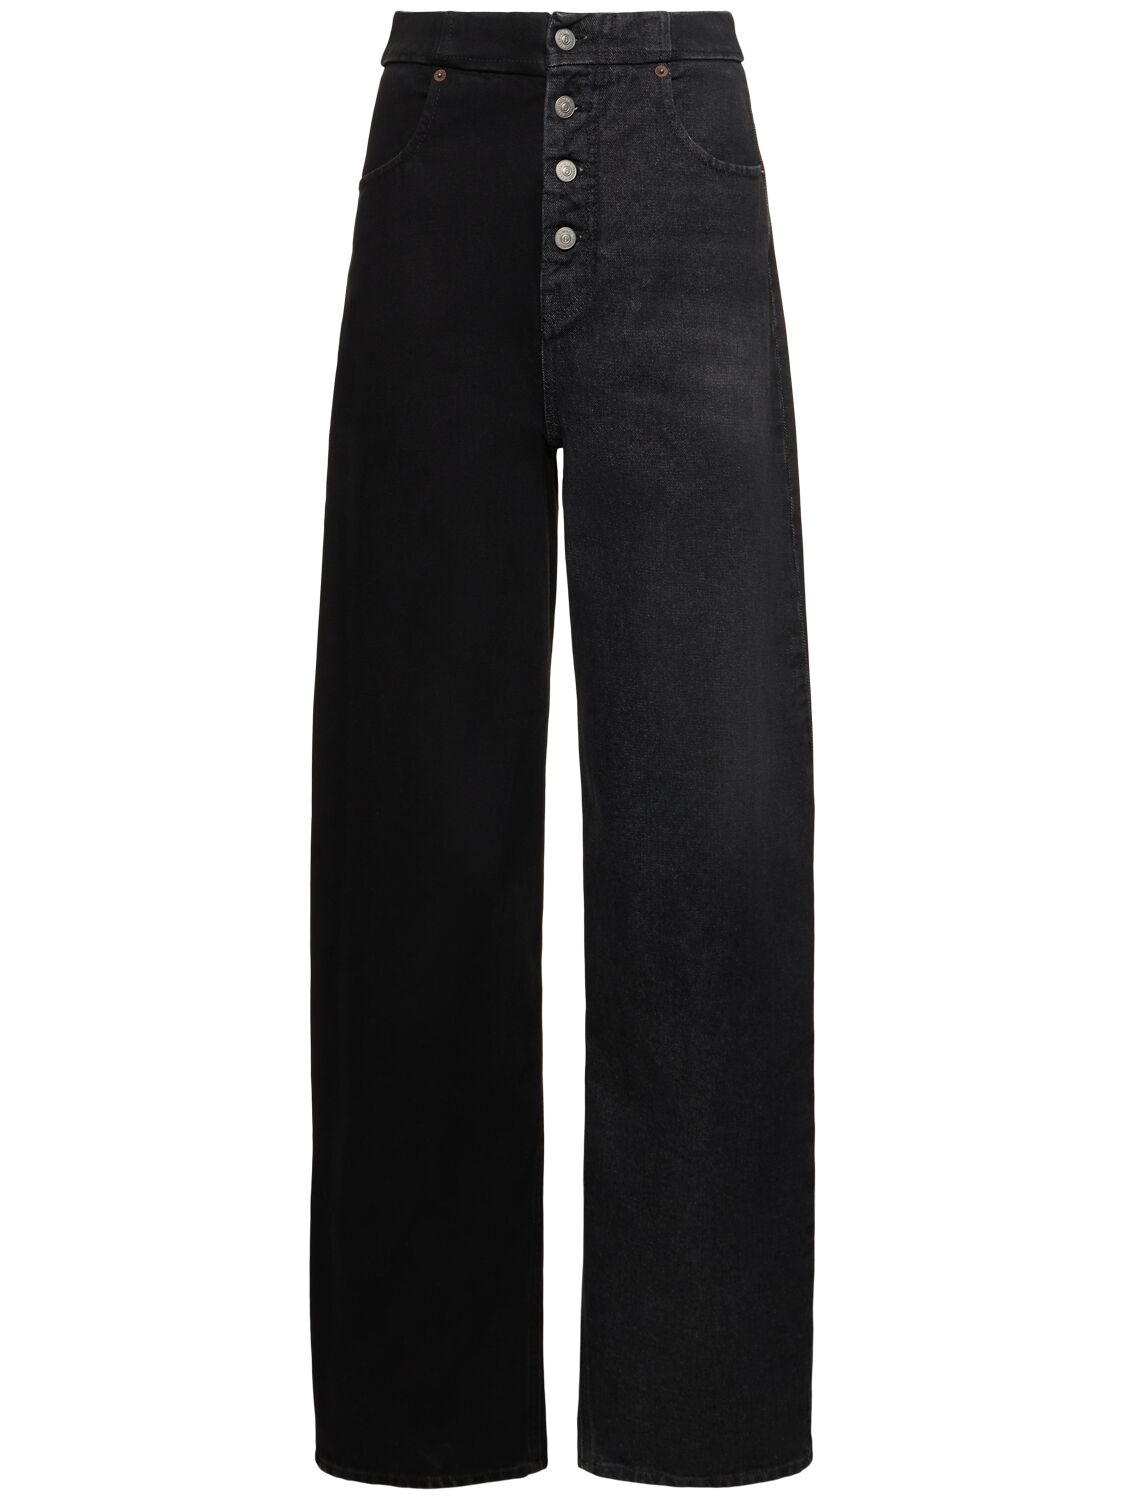 Mm6 Maison Margiela 双色直筒牛仔裤 In Black,grey